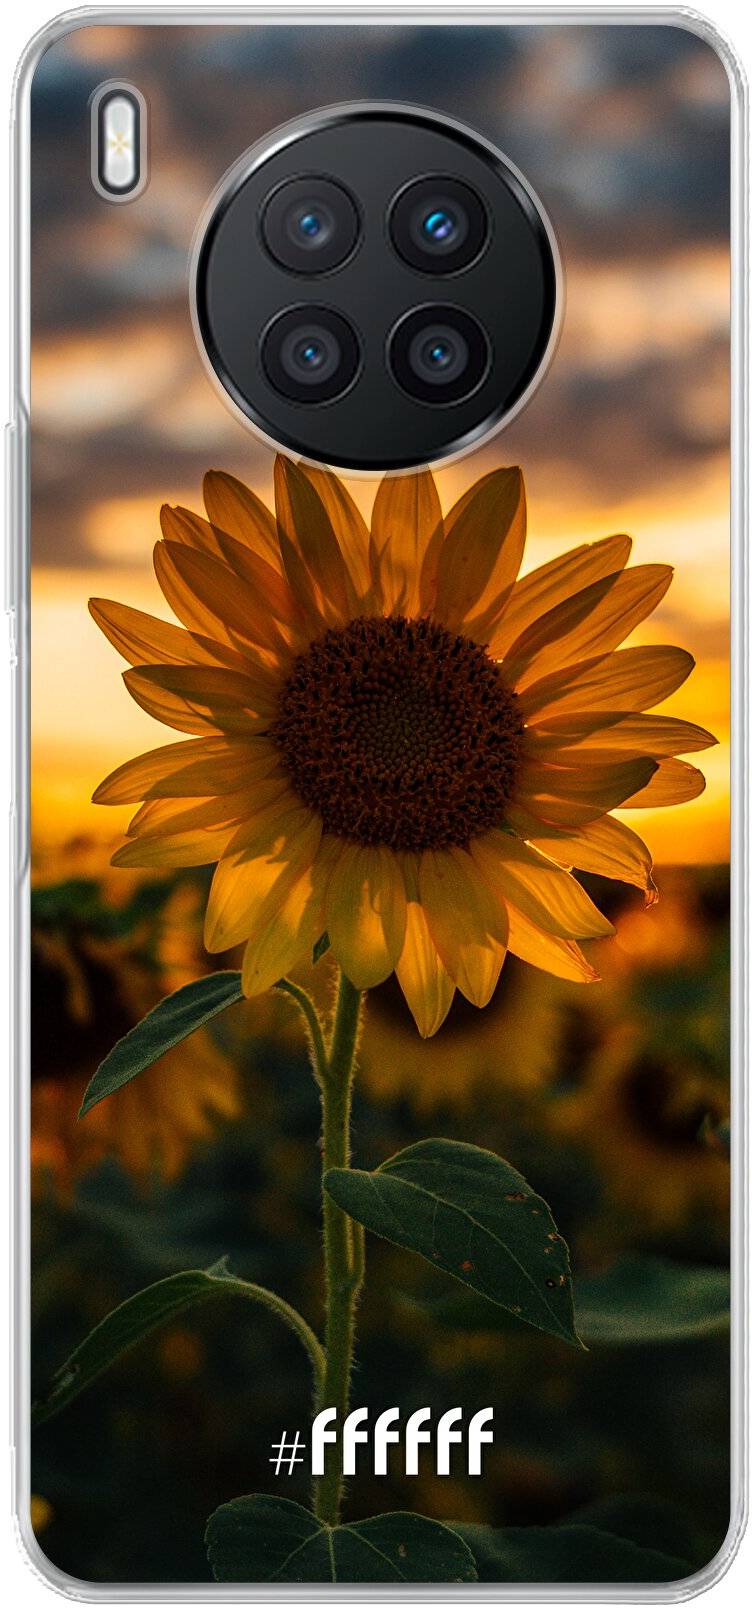 Sunset Sunflower Nova 8i